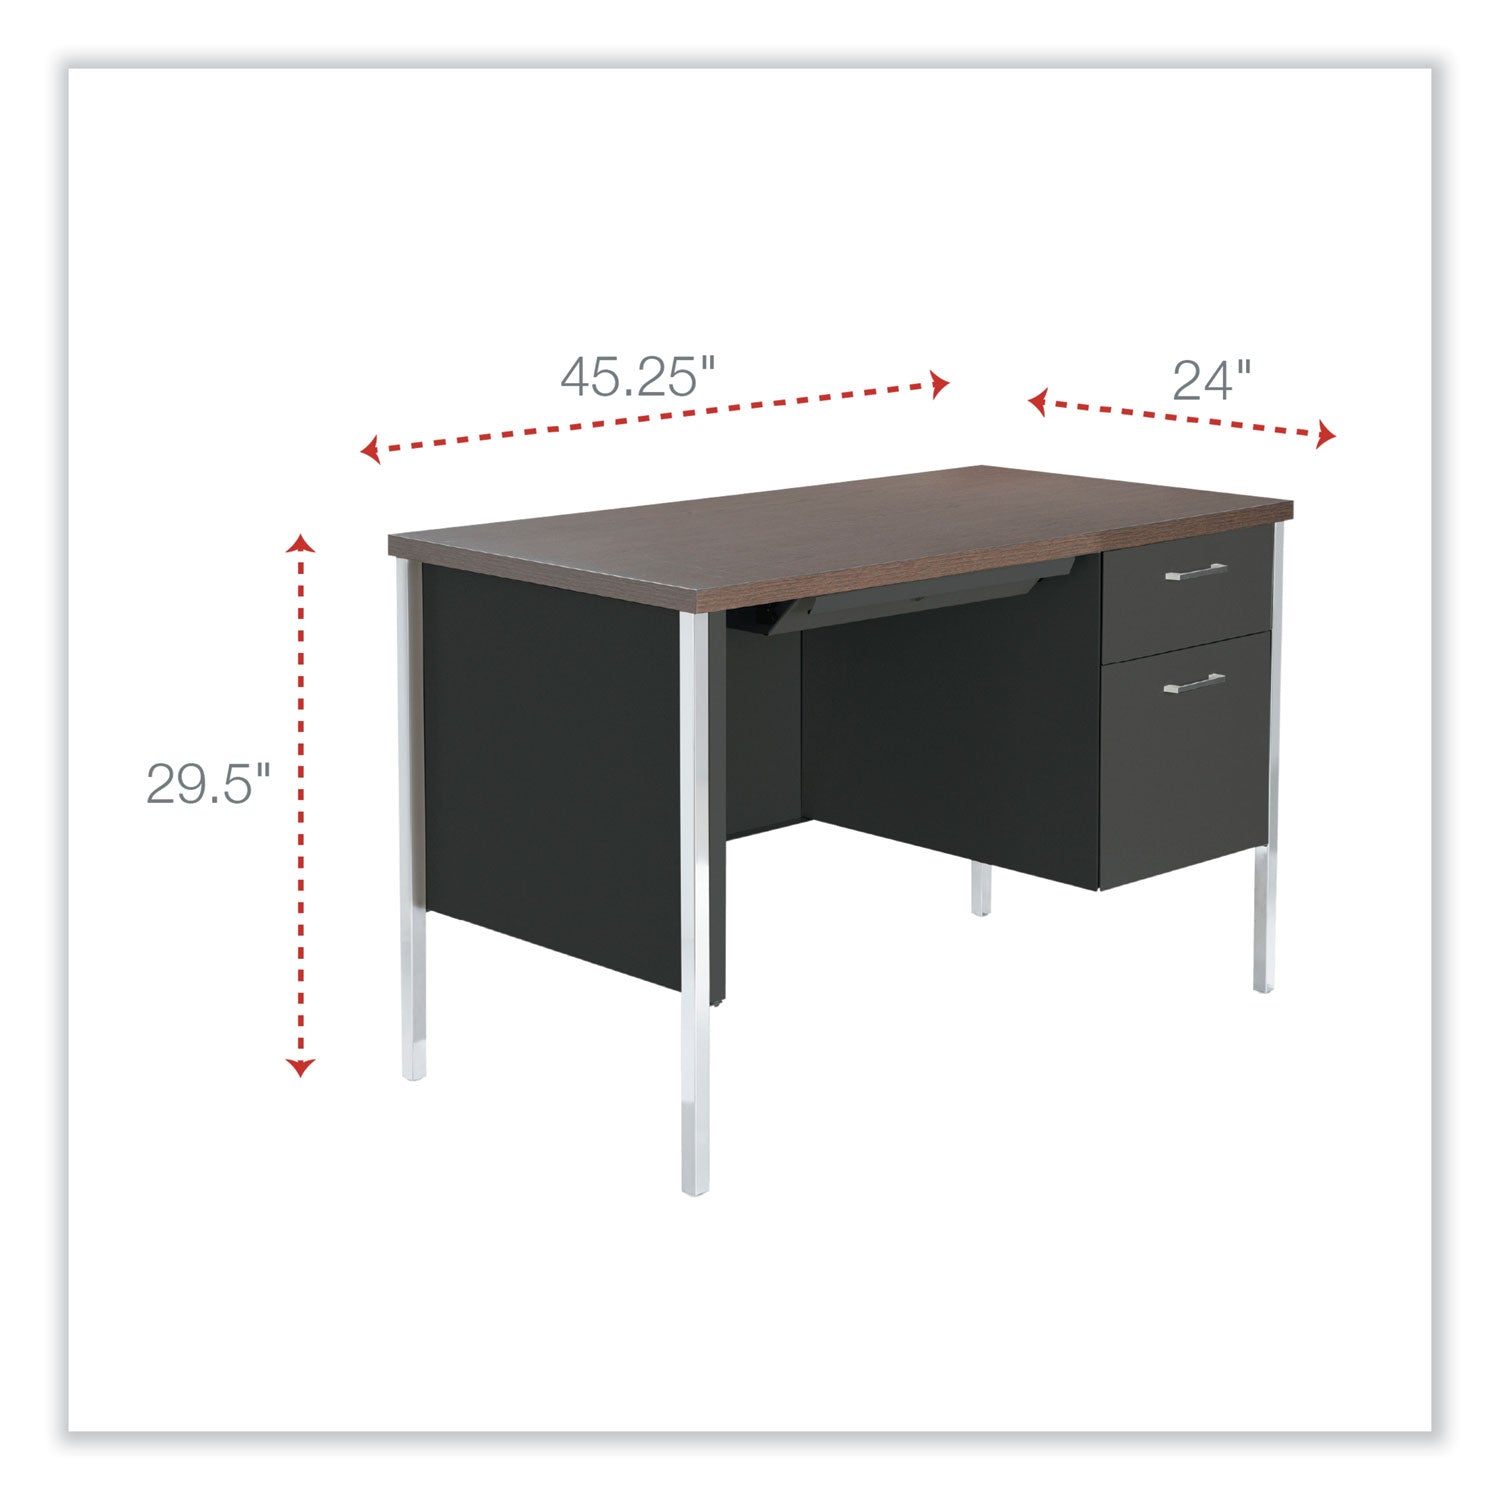 single-pedestal-steel-desk-4525-x-24-x-295-mocha-black-chrome-legs_alesd4524bm - 2